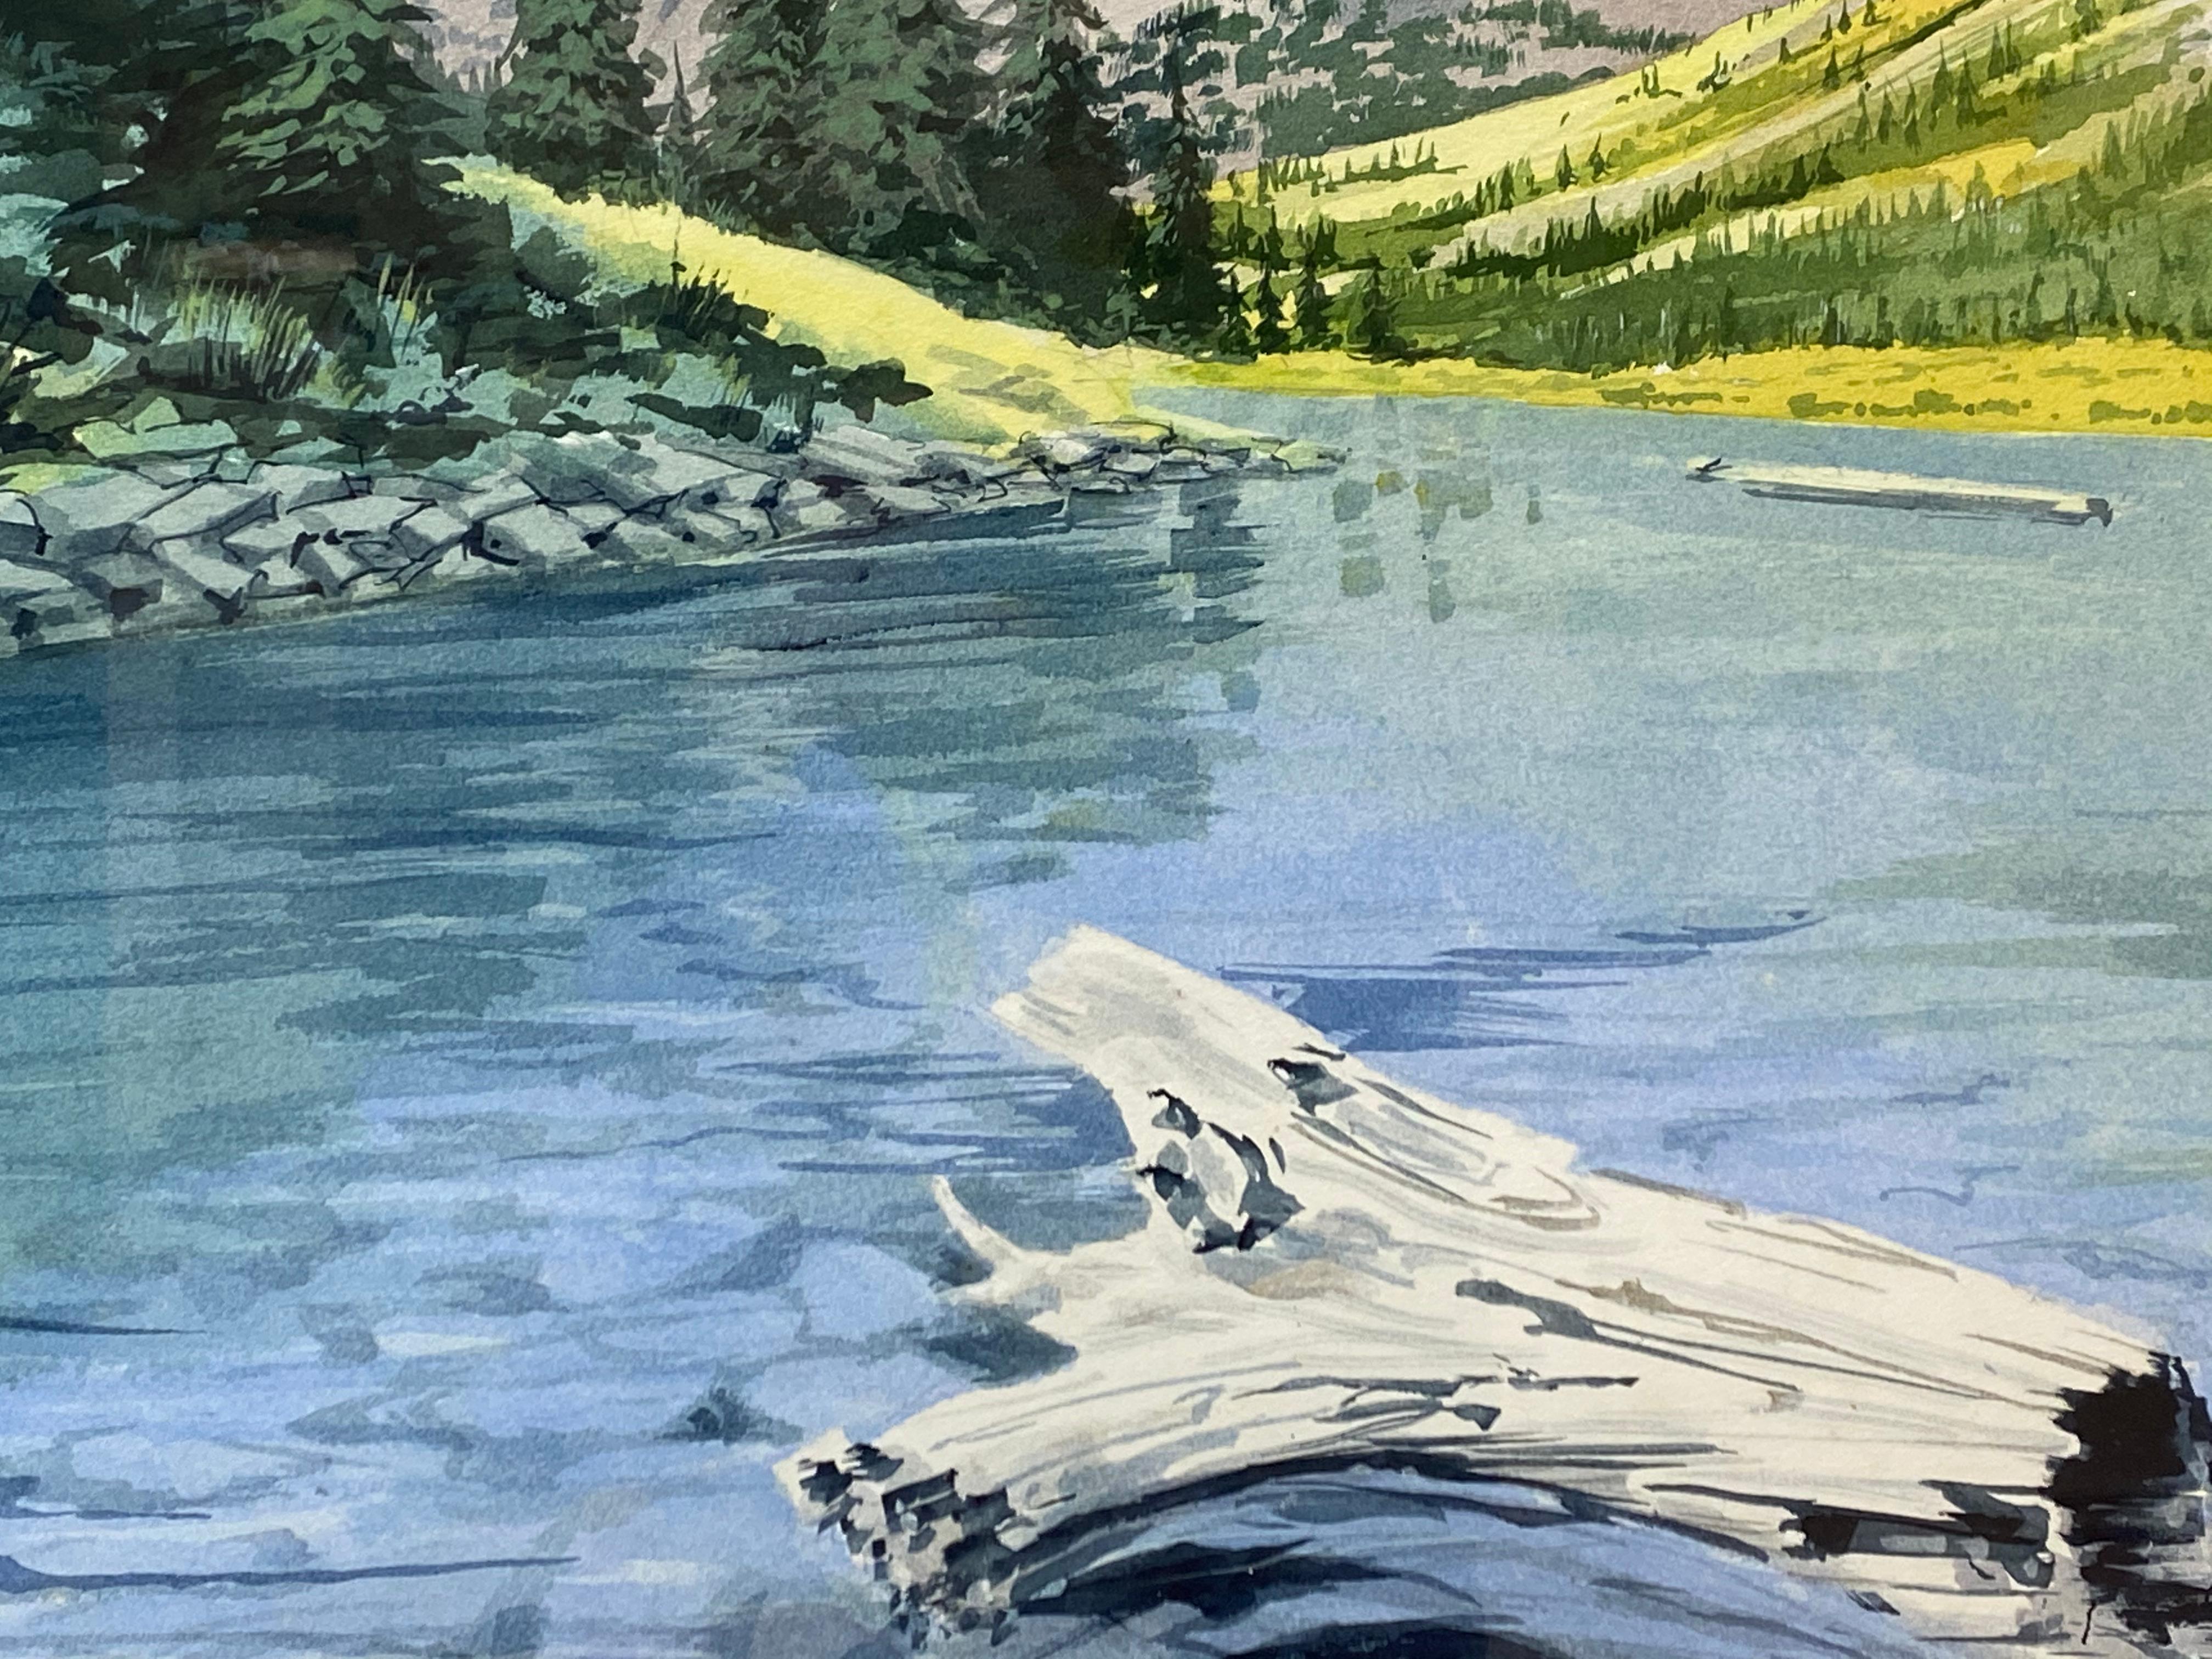 mountain scene watercolor